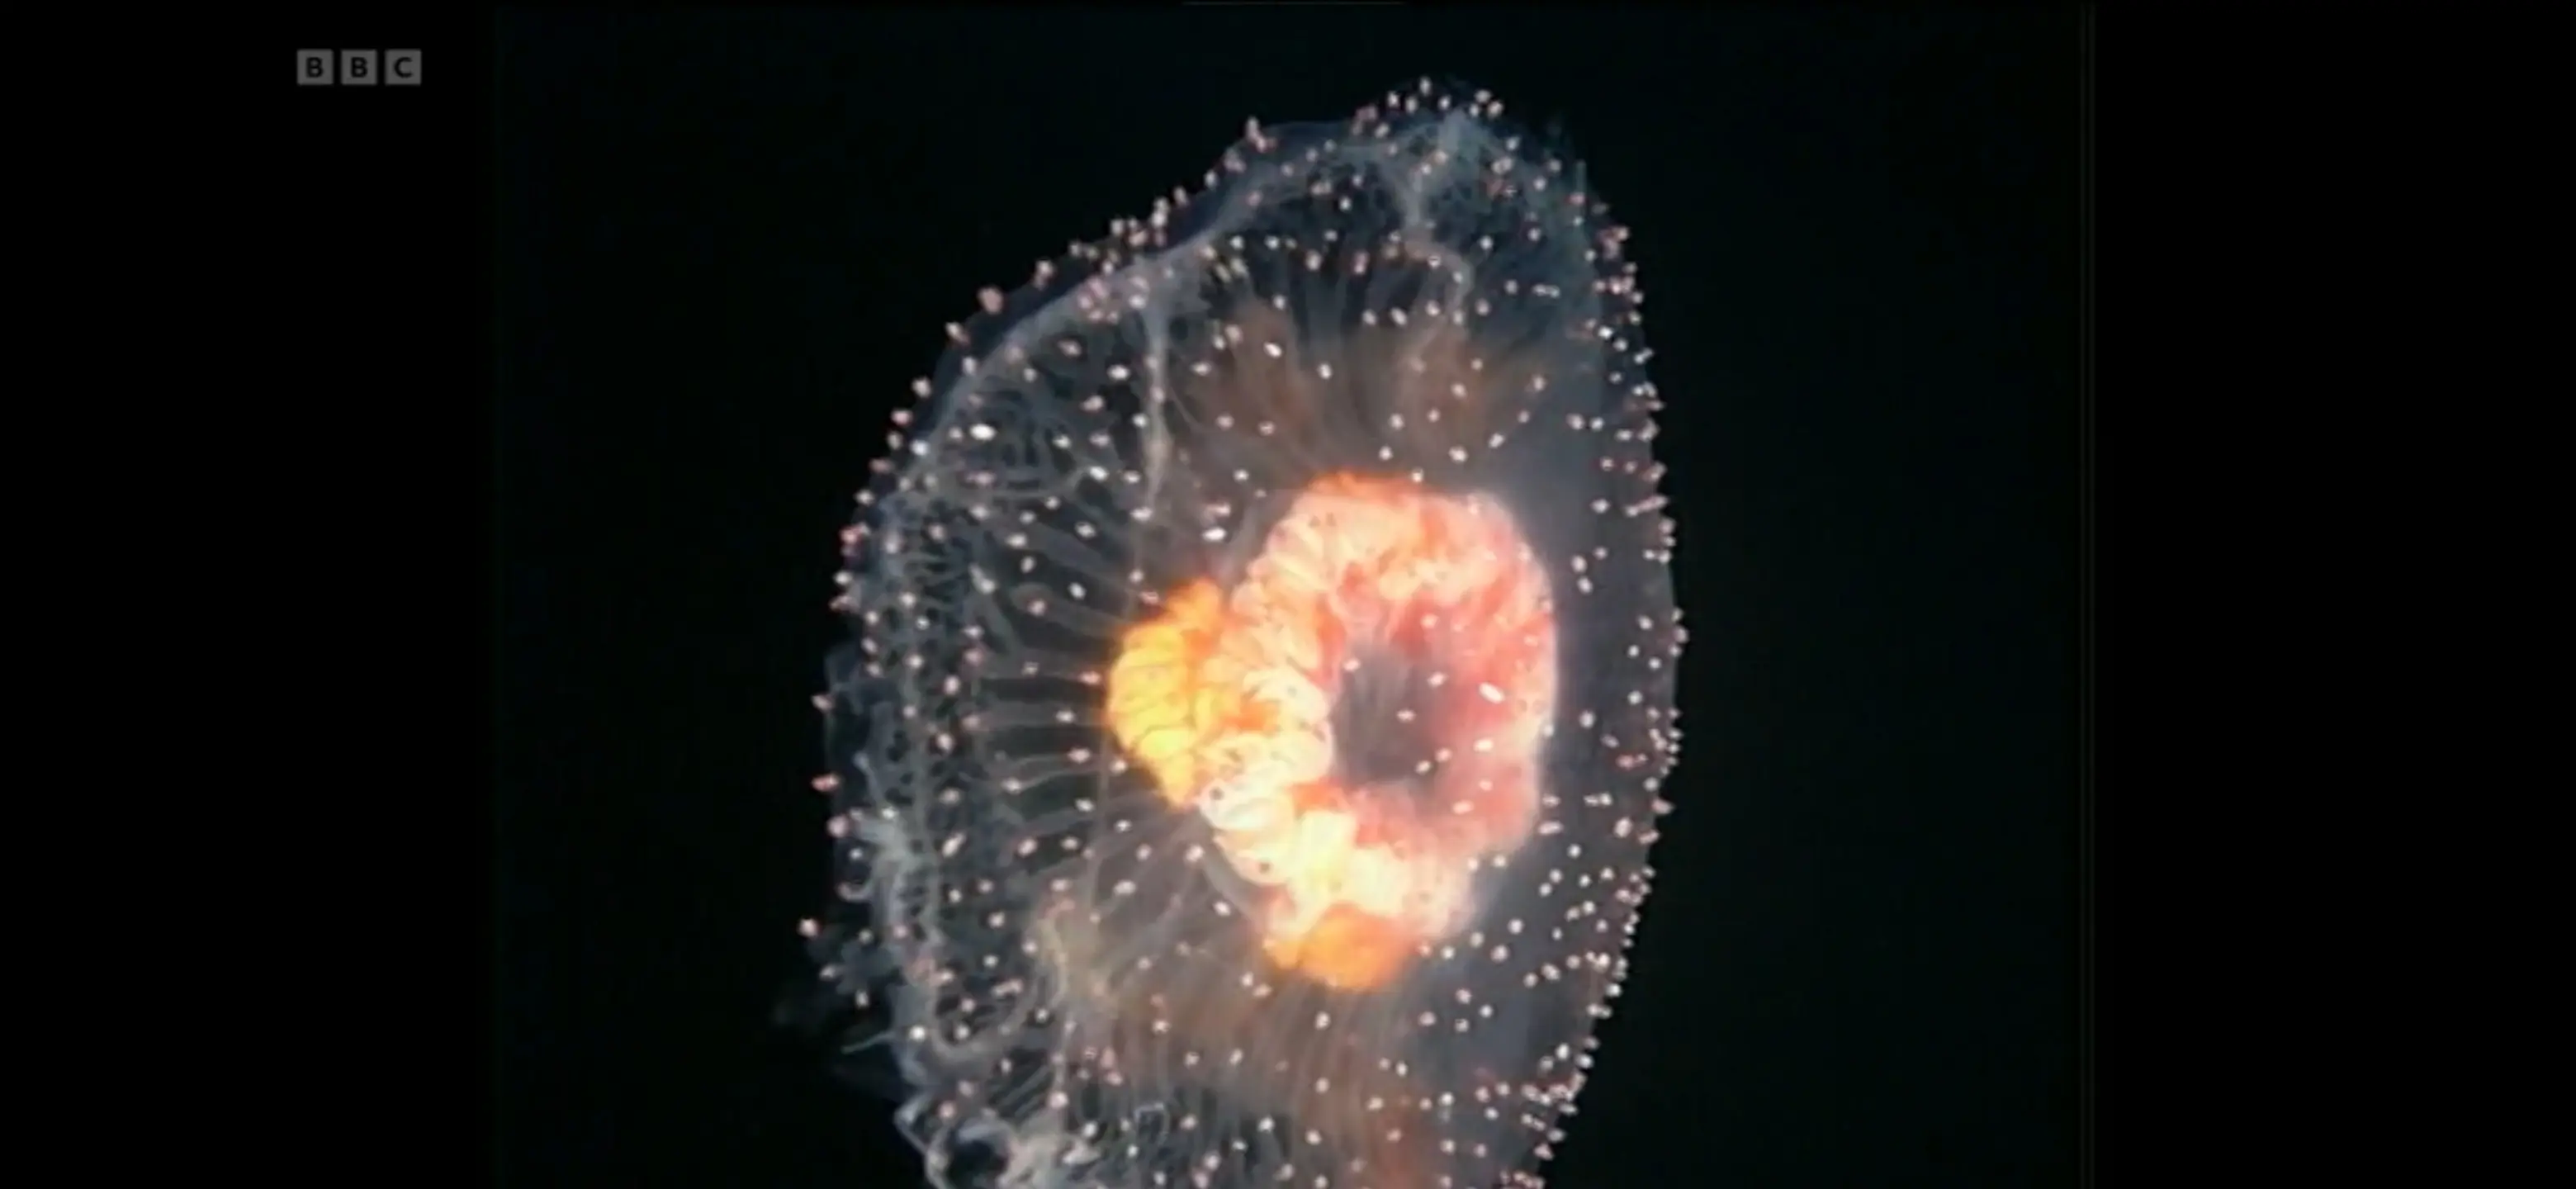 Jellyfish (Diplulmaris antarctica) as shown in Life in the Freezer - The Big Freeze